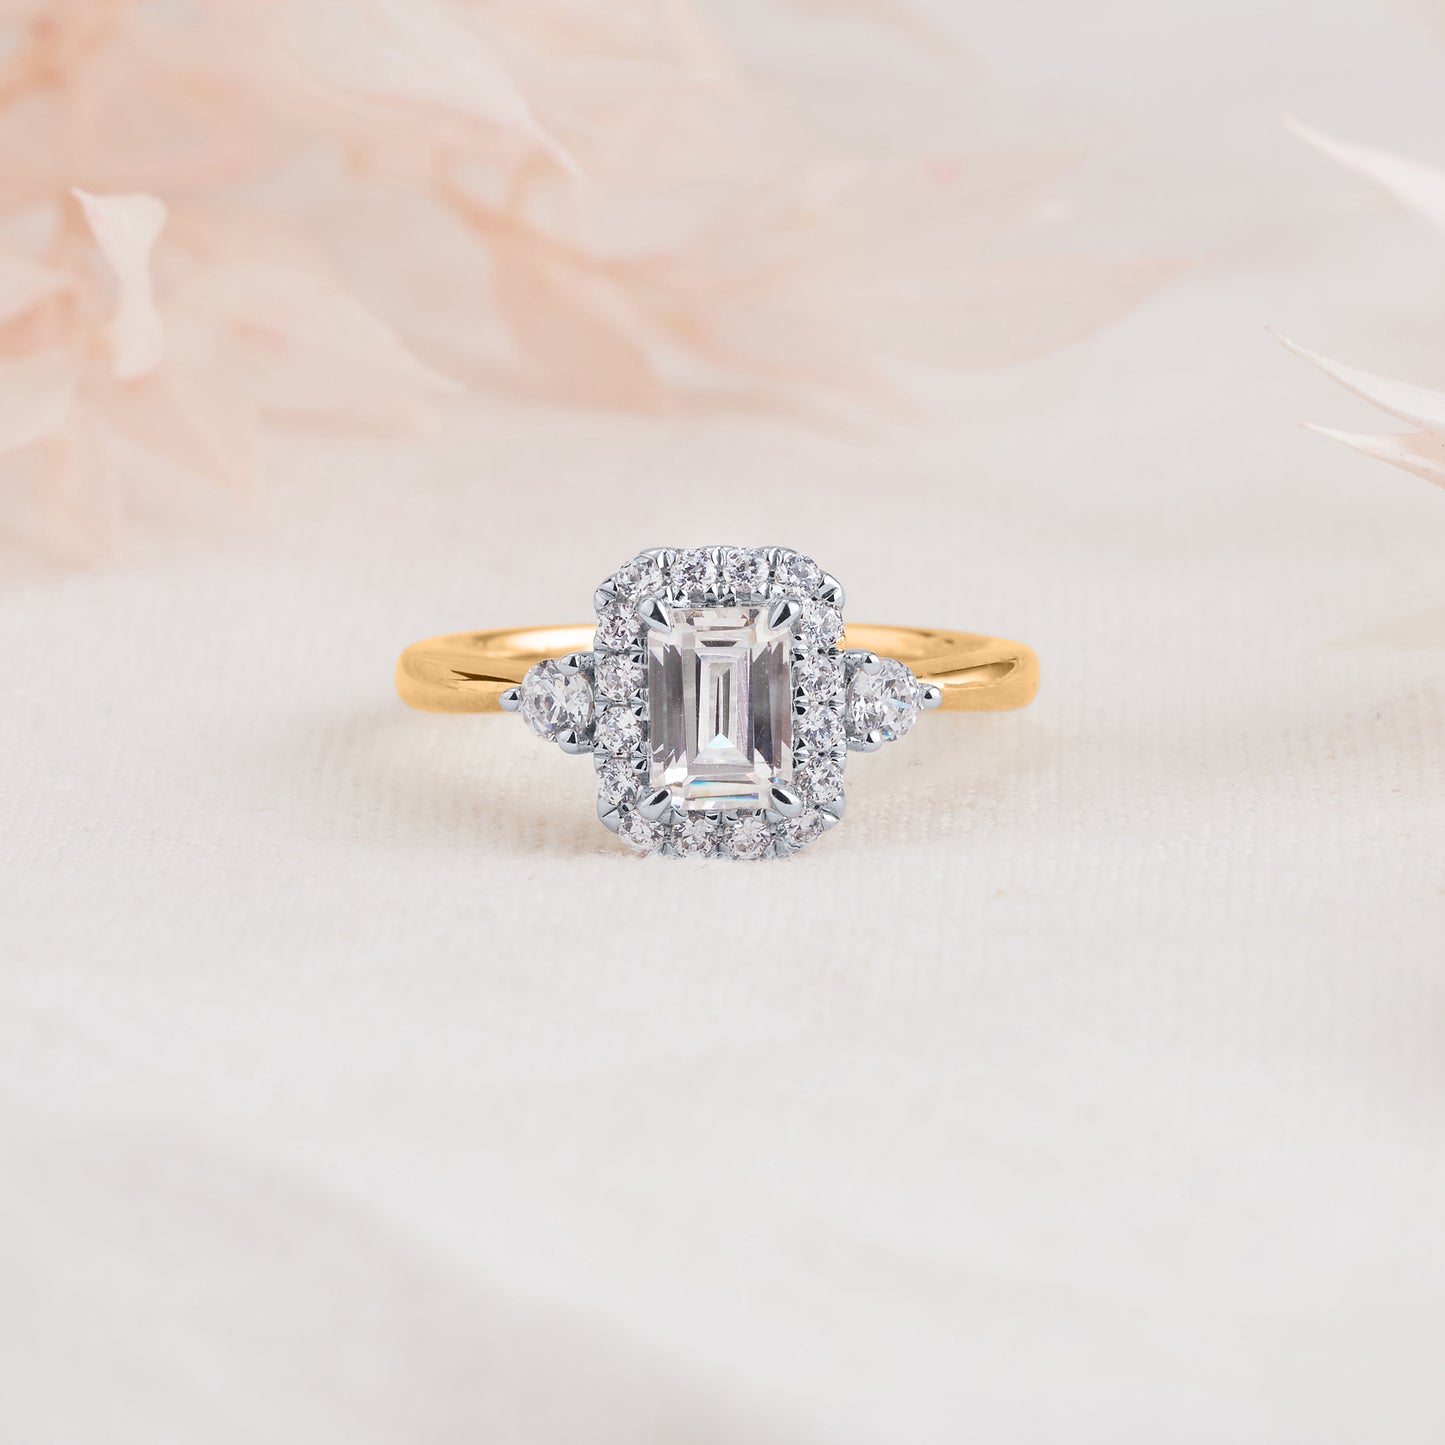 18K Yellow Gold and Platinum Emerald Cut Diamond Halo Engagement Ring 1.19tdw